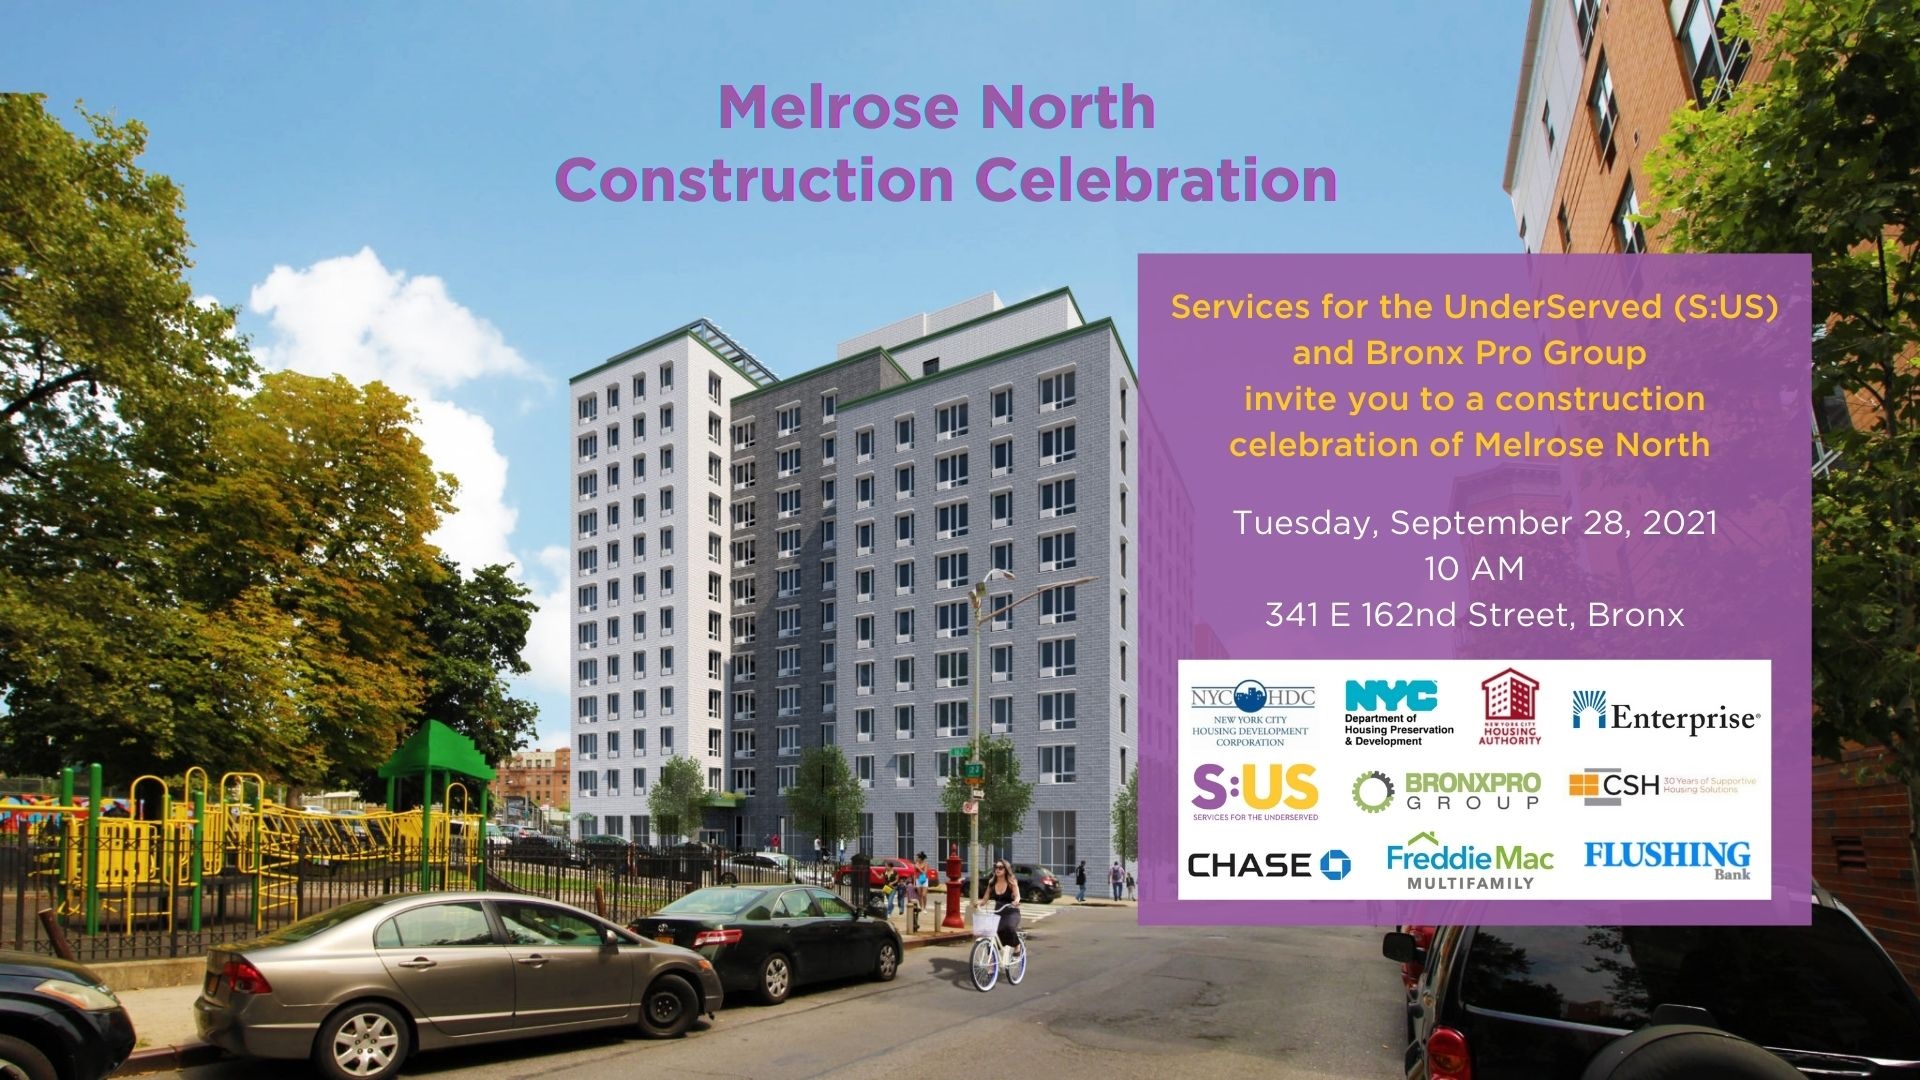 Join us for a construction celebration of Melrose North on September 28